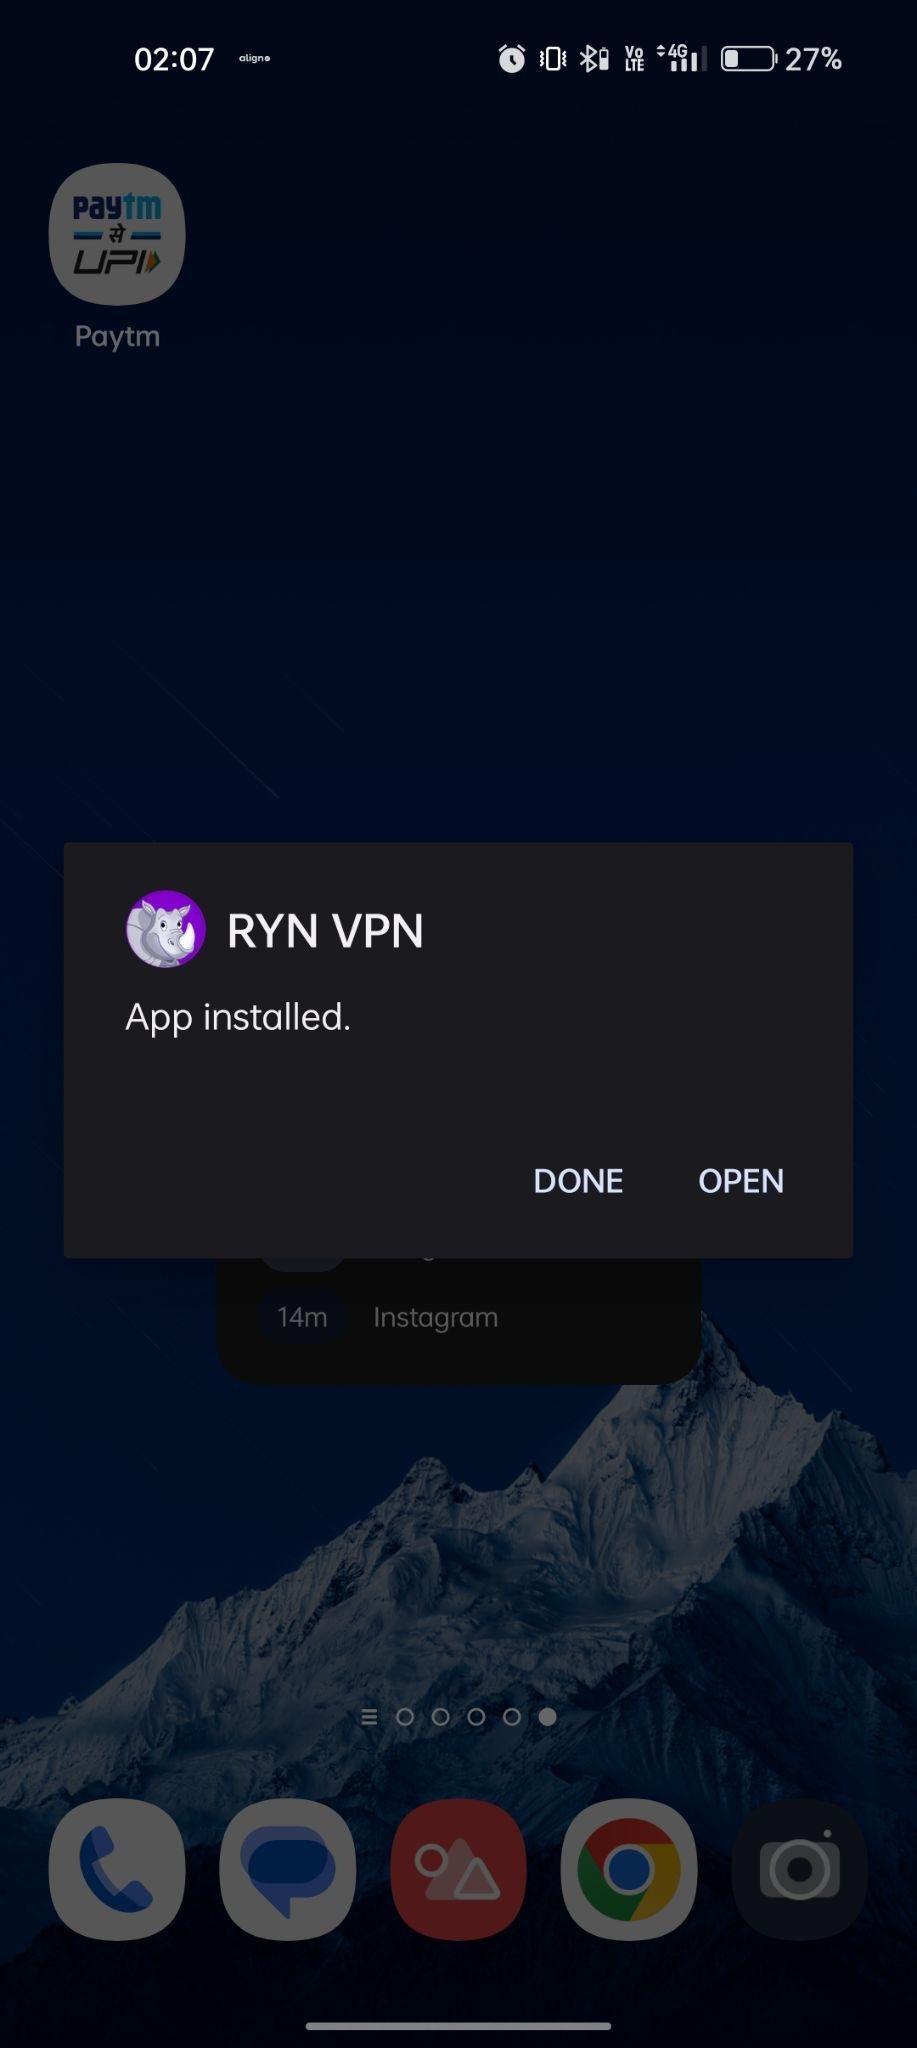 Ryn VPN apk installed